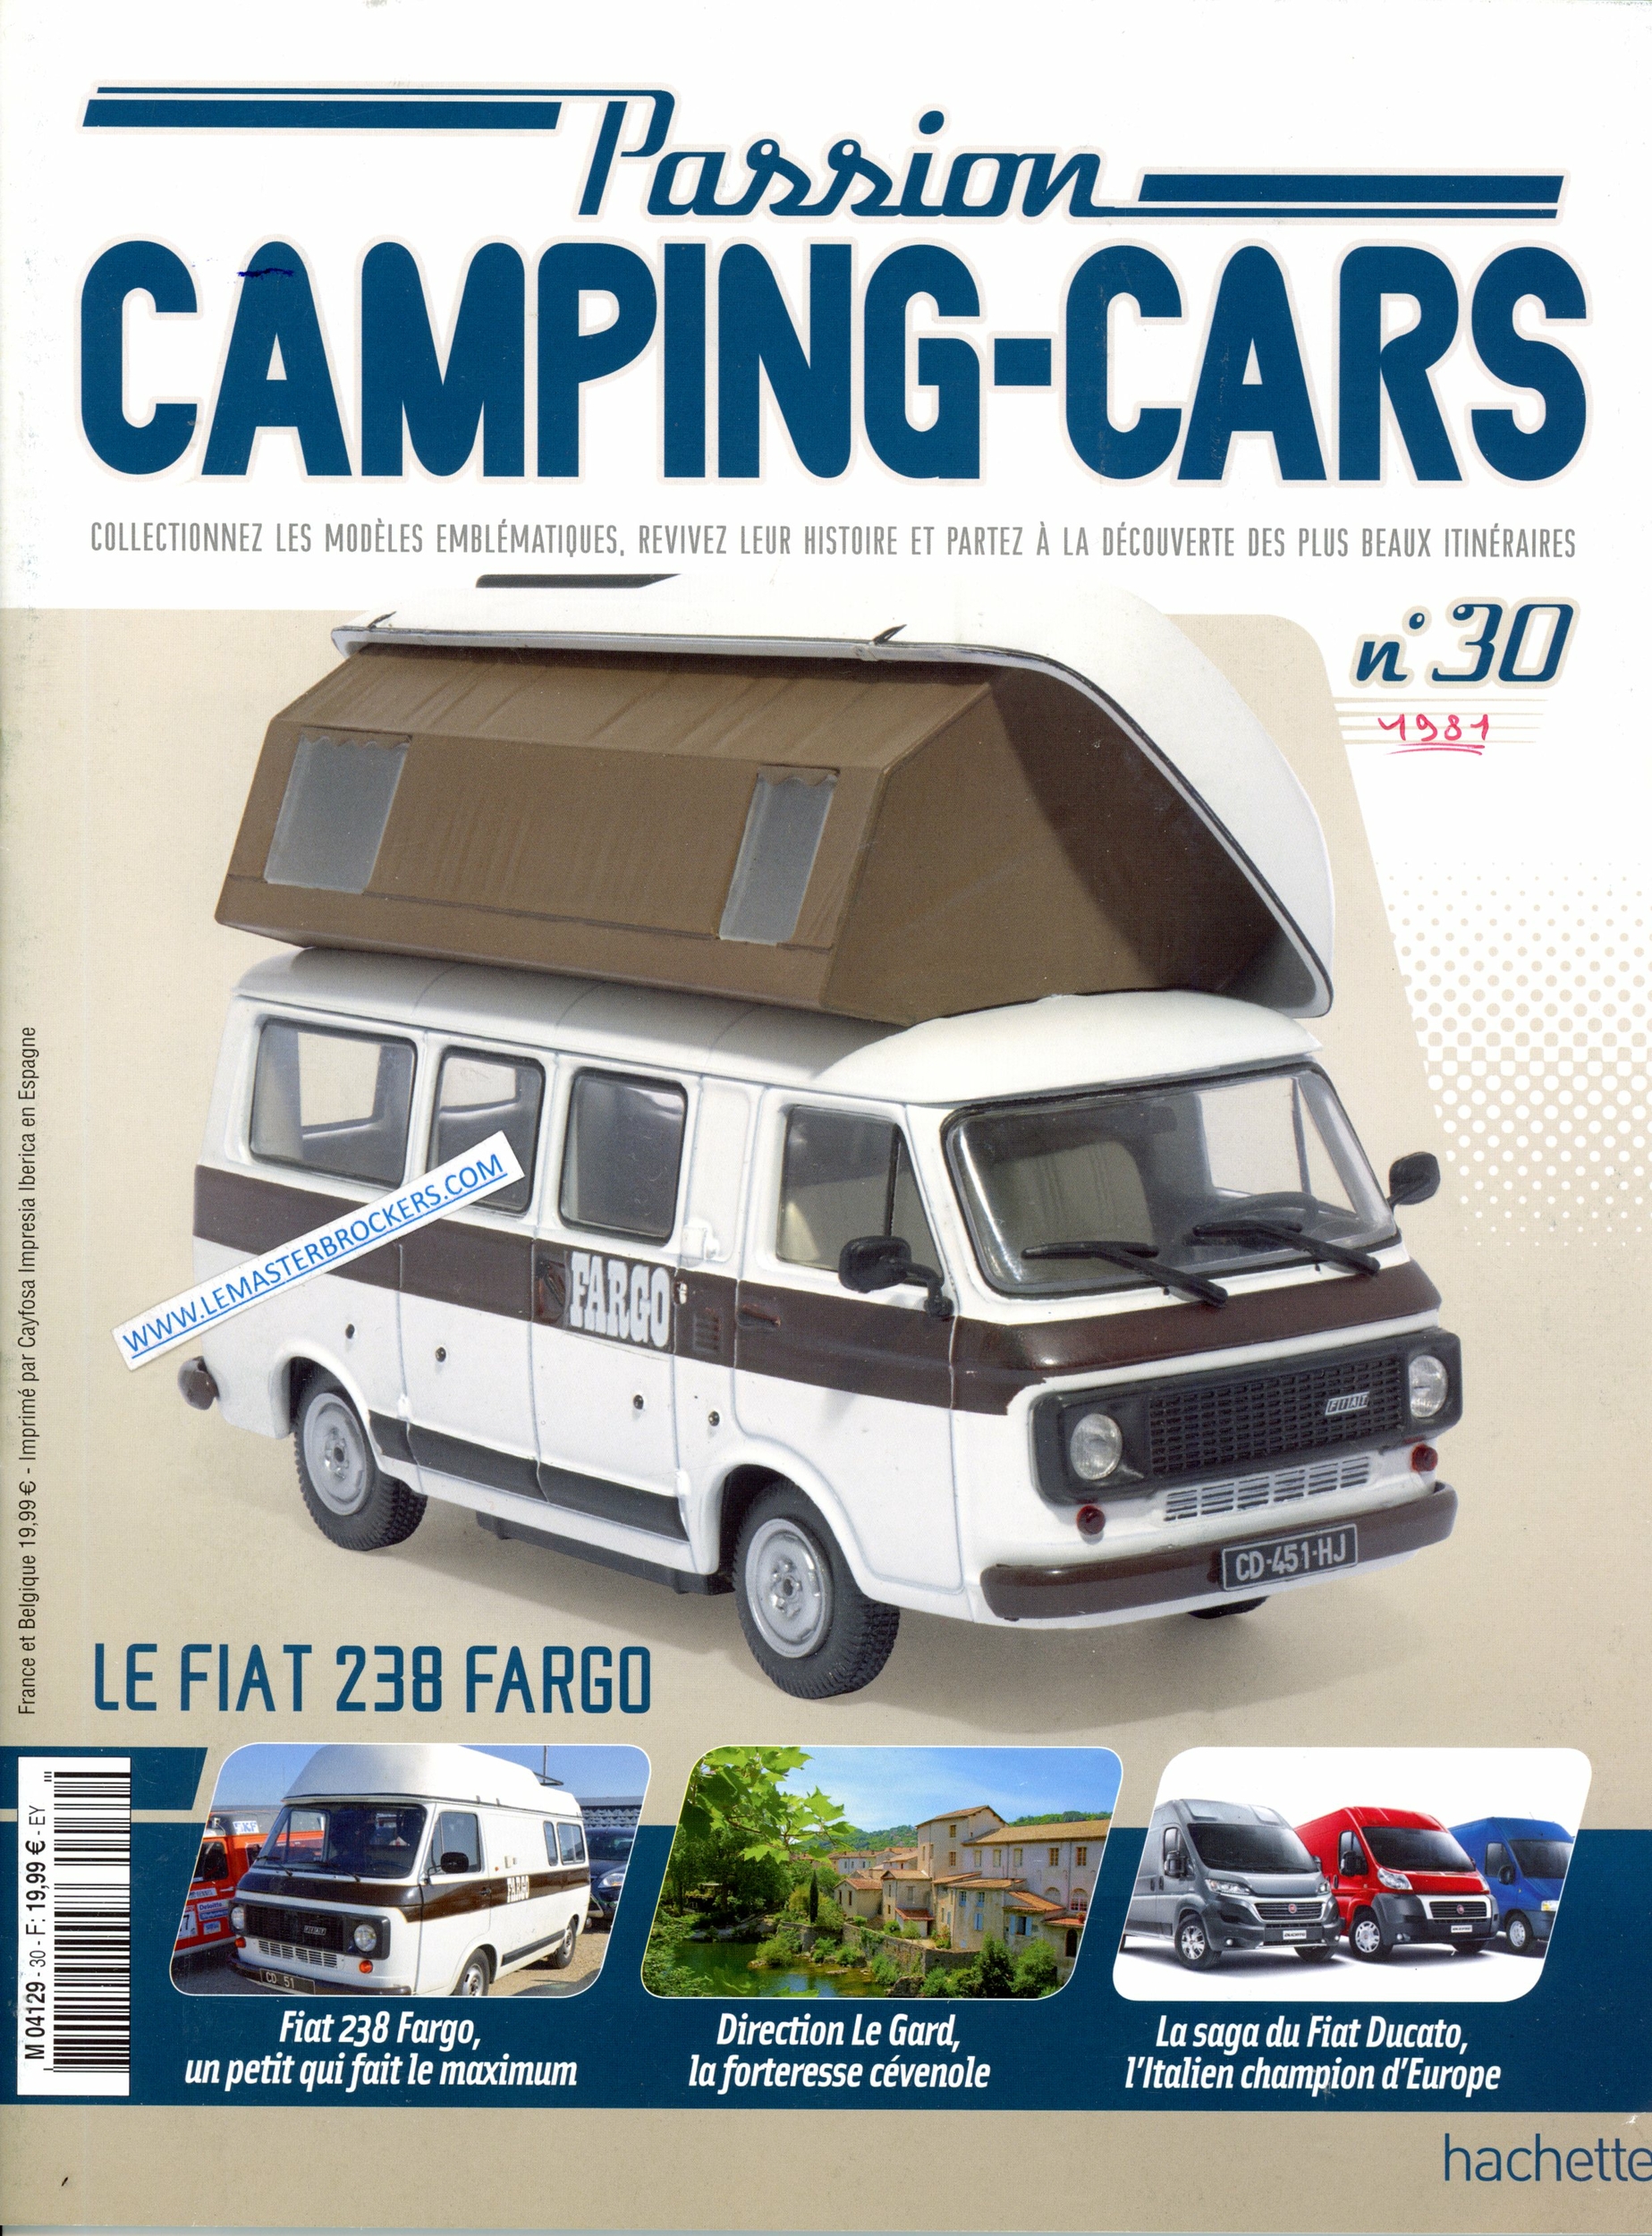 FIAT 238 FARGO PASSION CAMPING-CARS